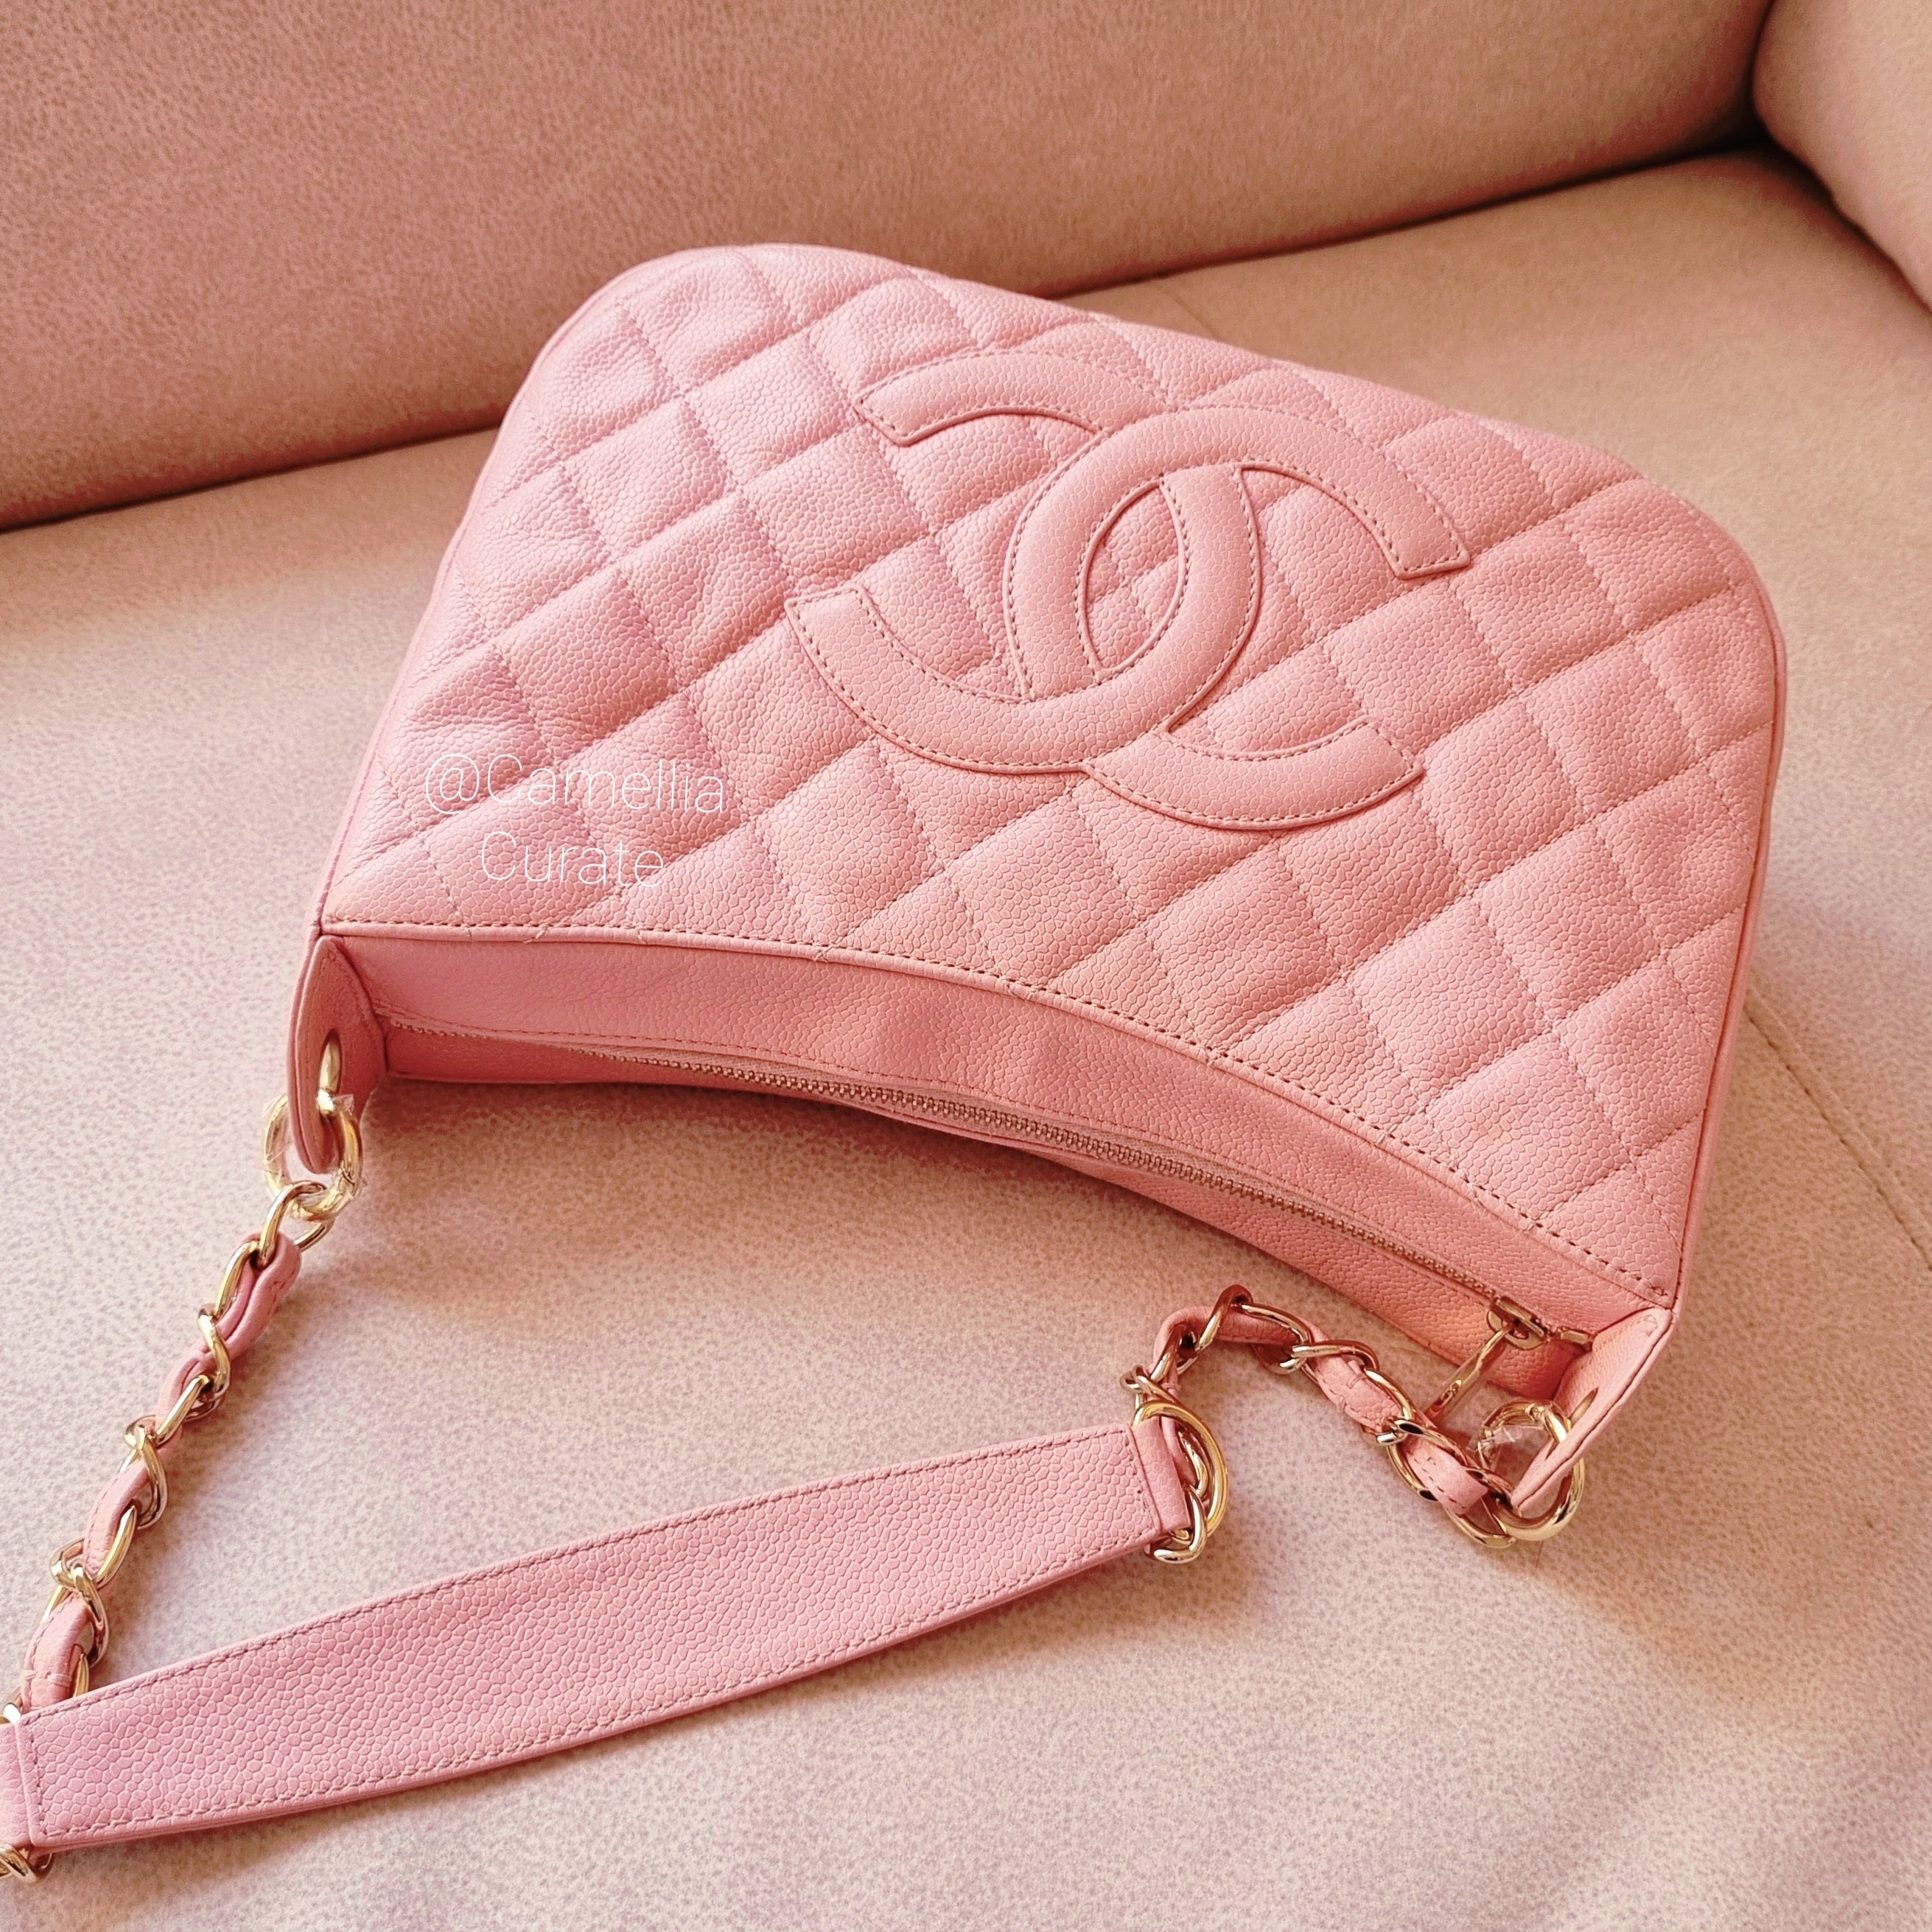 Chanel Camellia Bag - 83 For Sale on 1stDibs